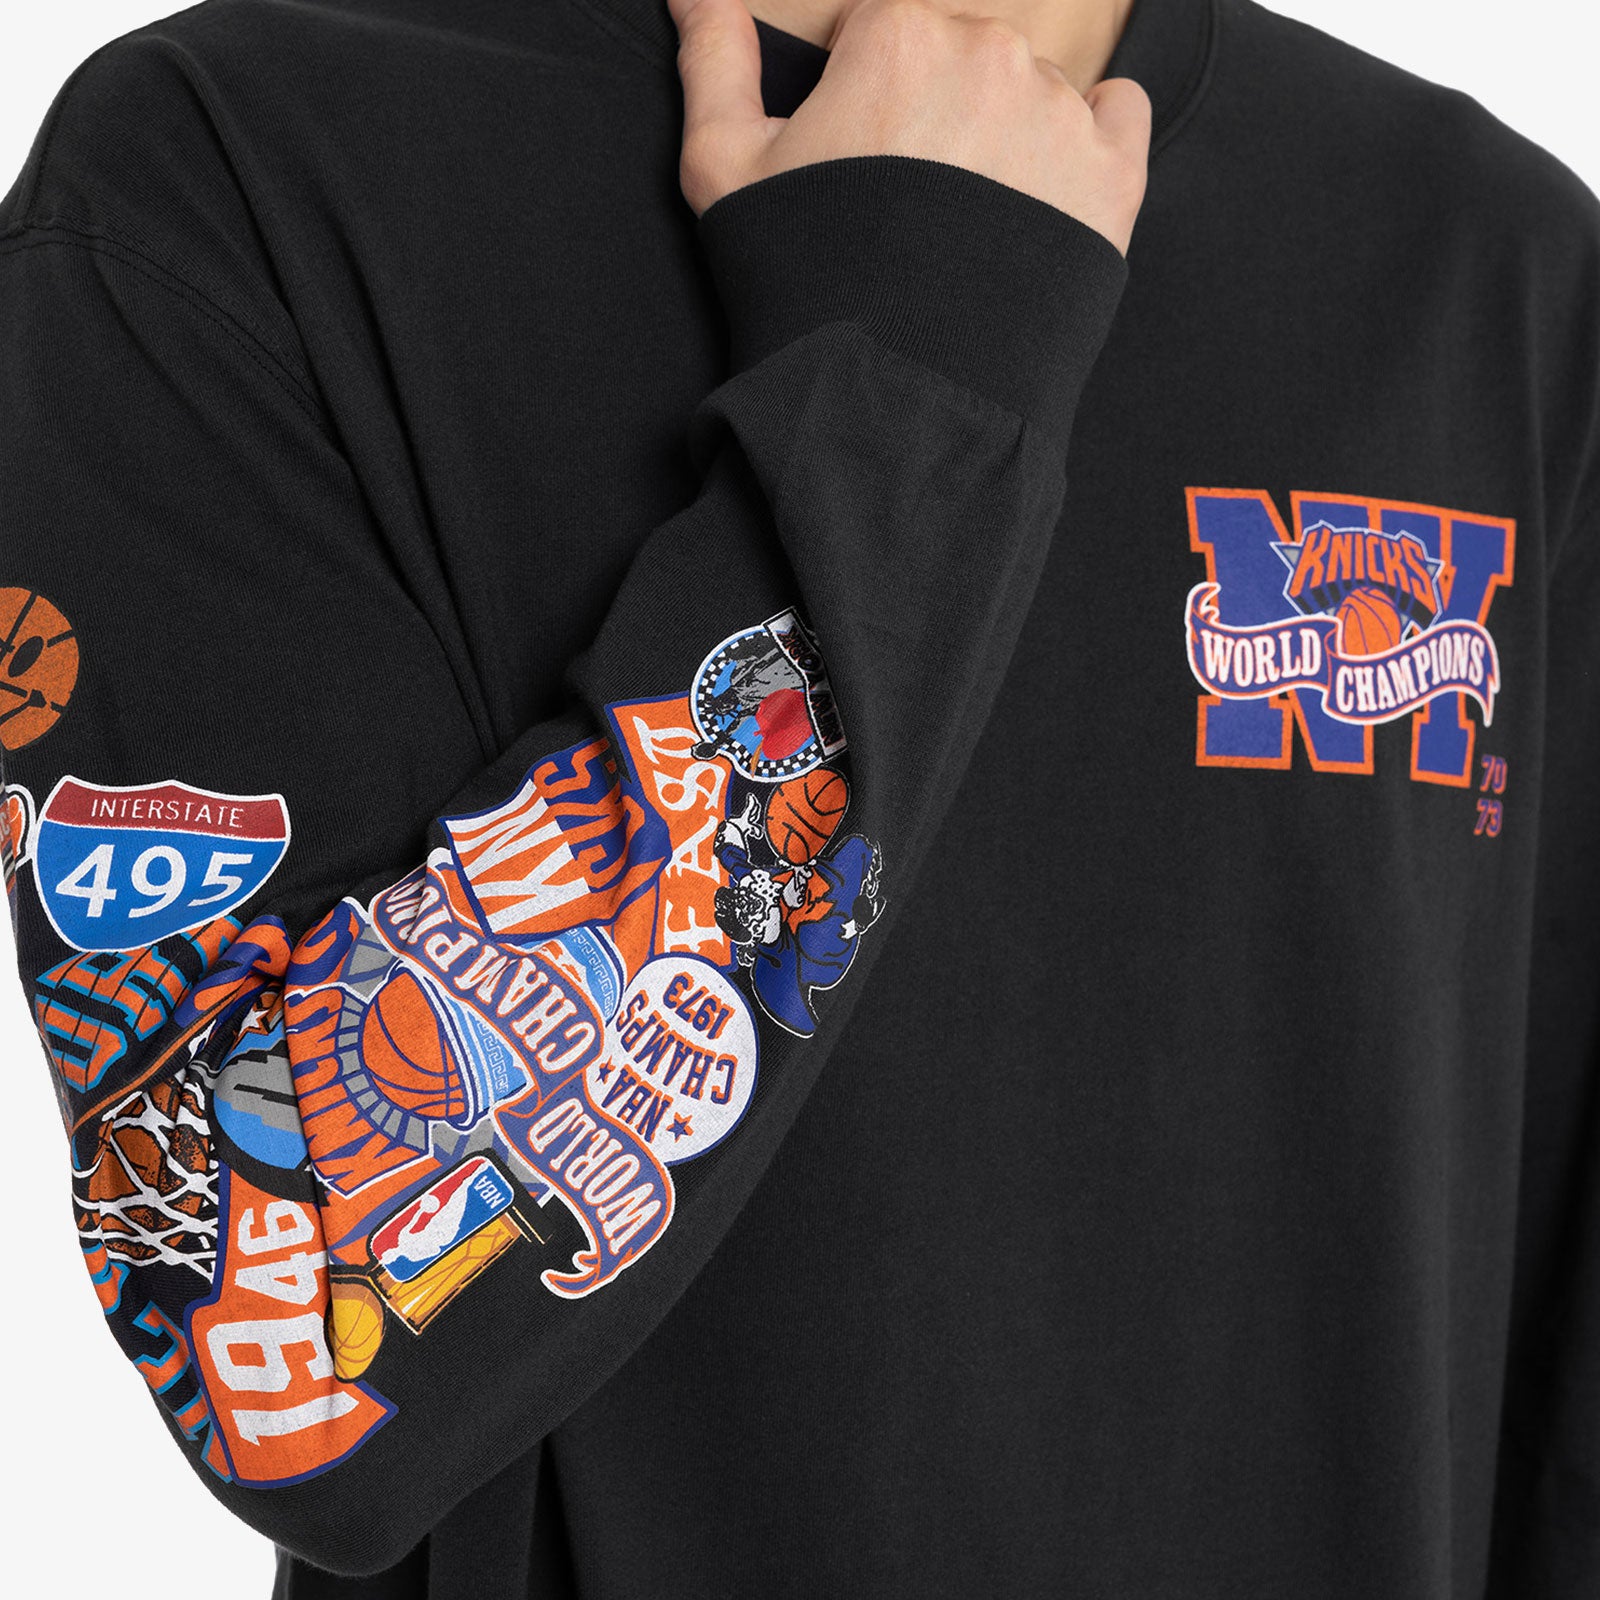 New York Knicks World Champions Long Sleeve Tee - Faded Black - Throwback